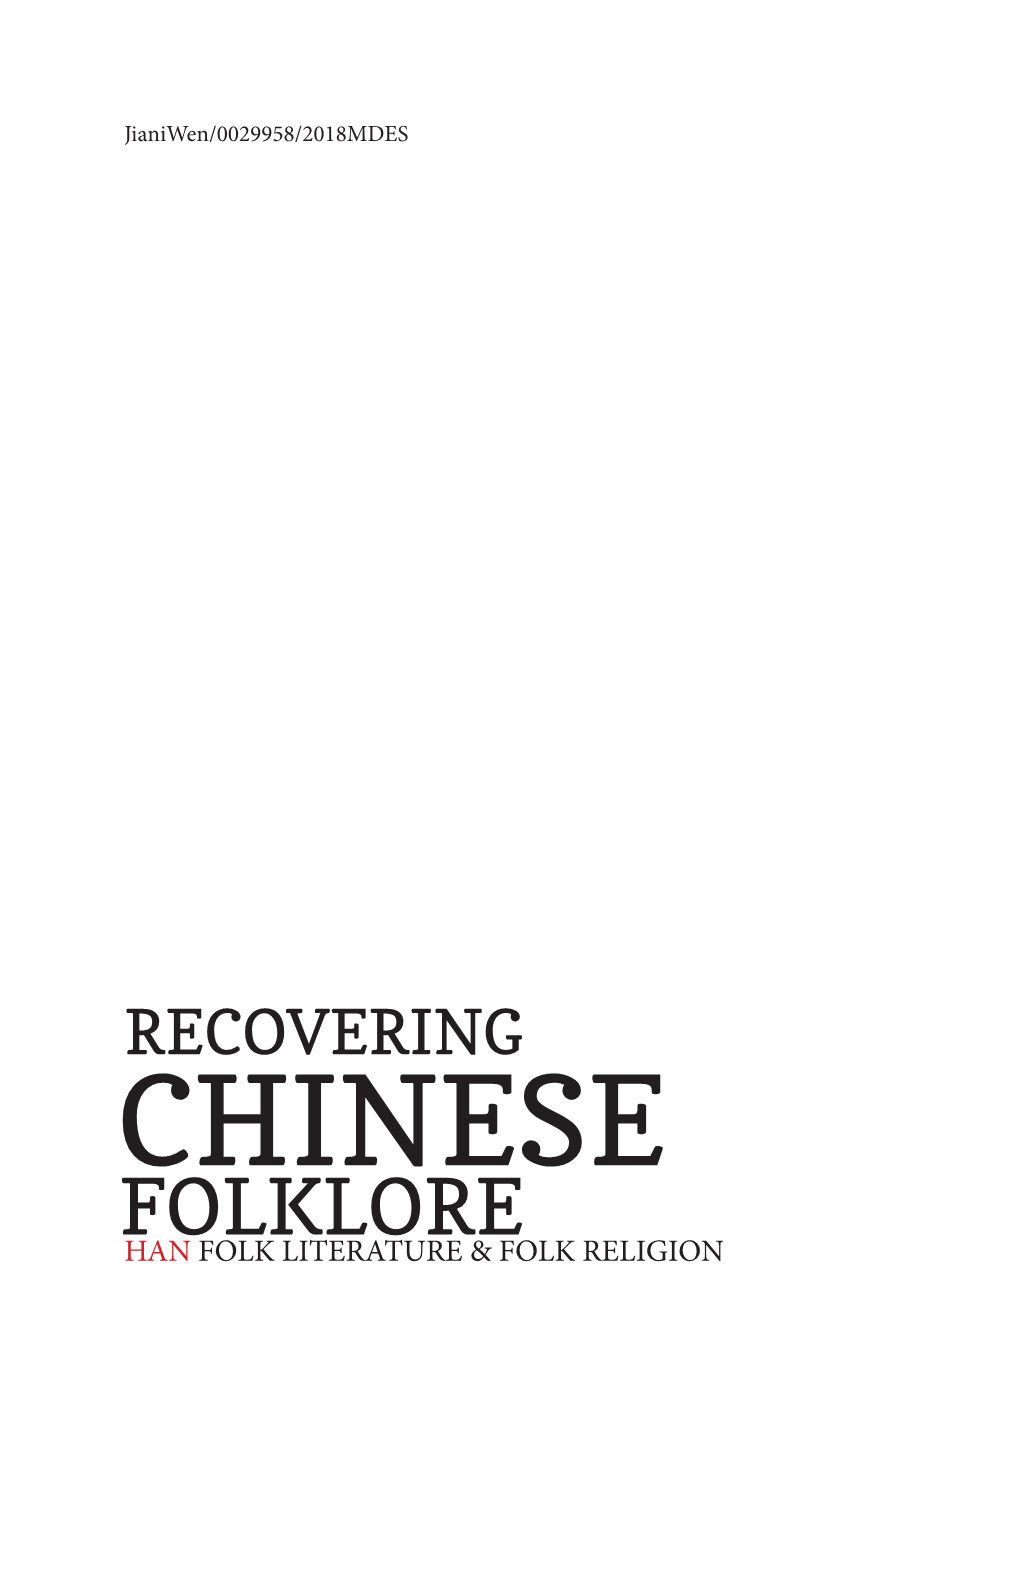 Chinese Folklore Han Folk Literature & Folk Religion